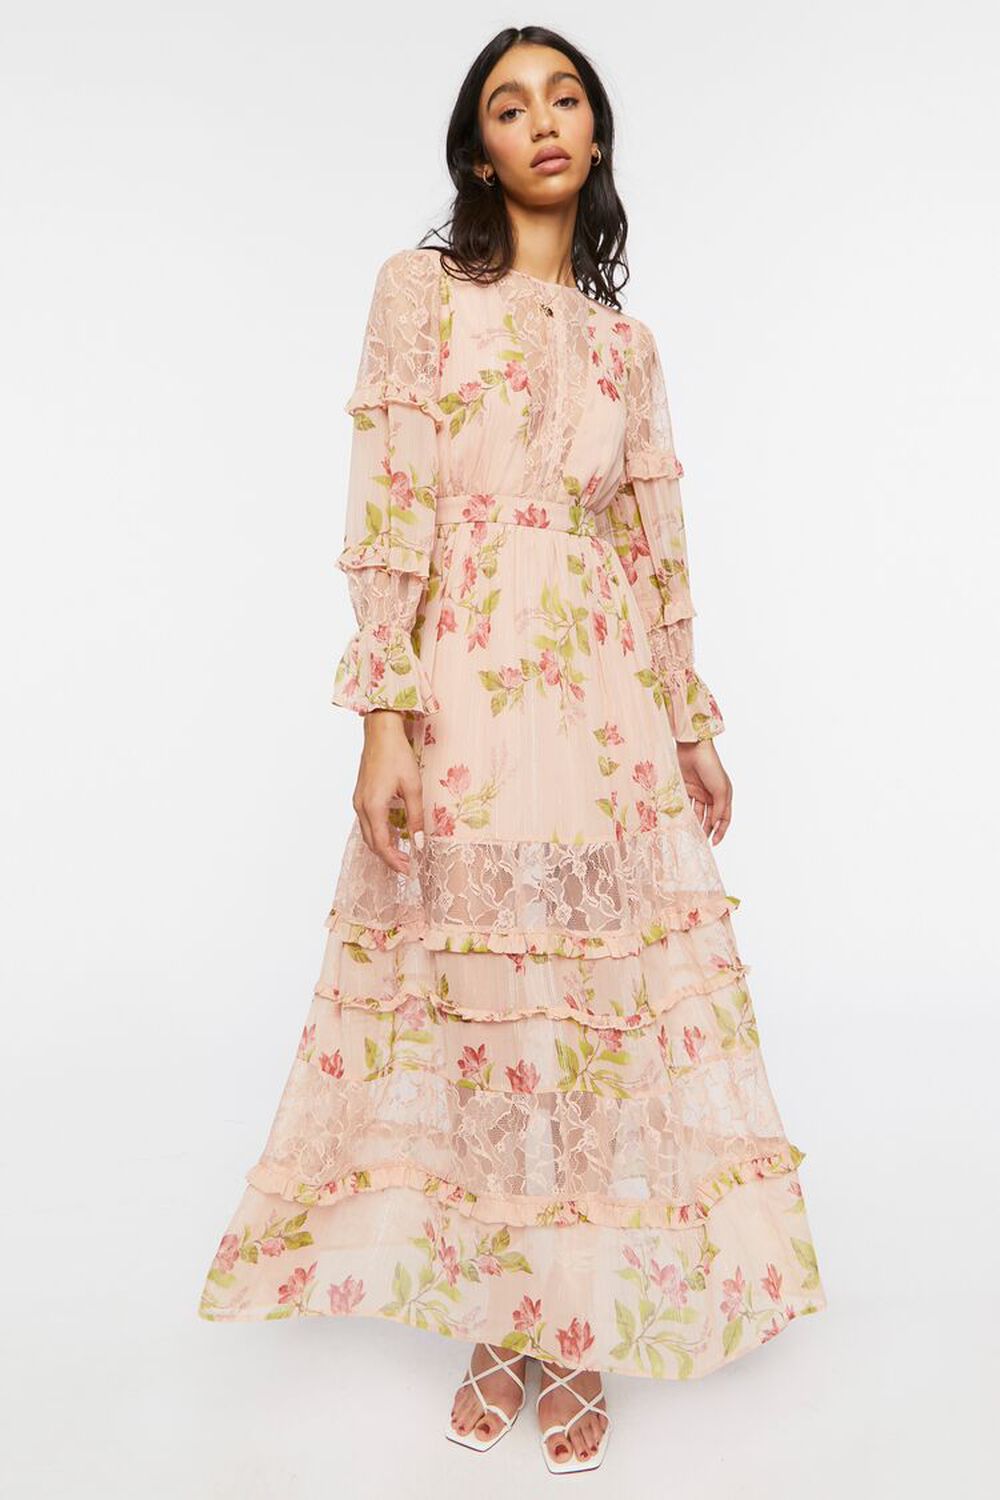 BLUSH Lace-Trim Tiered Floral Maxi Dress, image 1